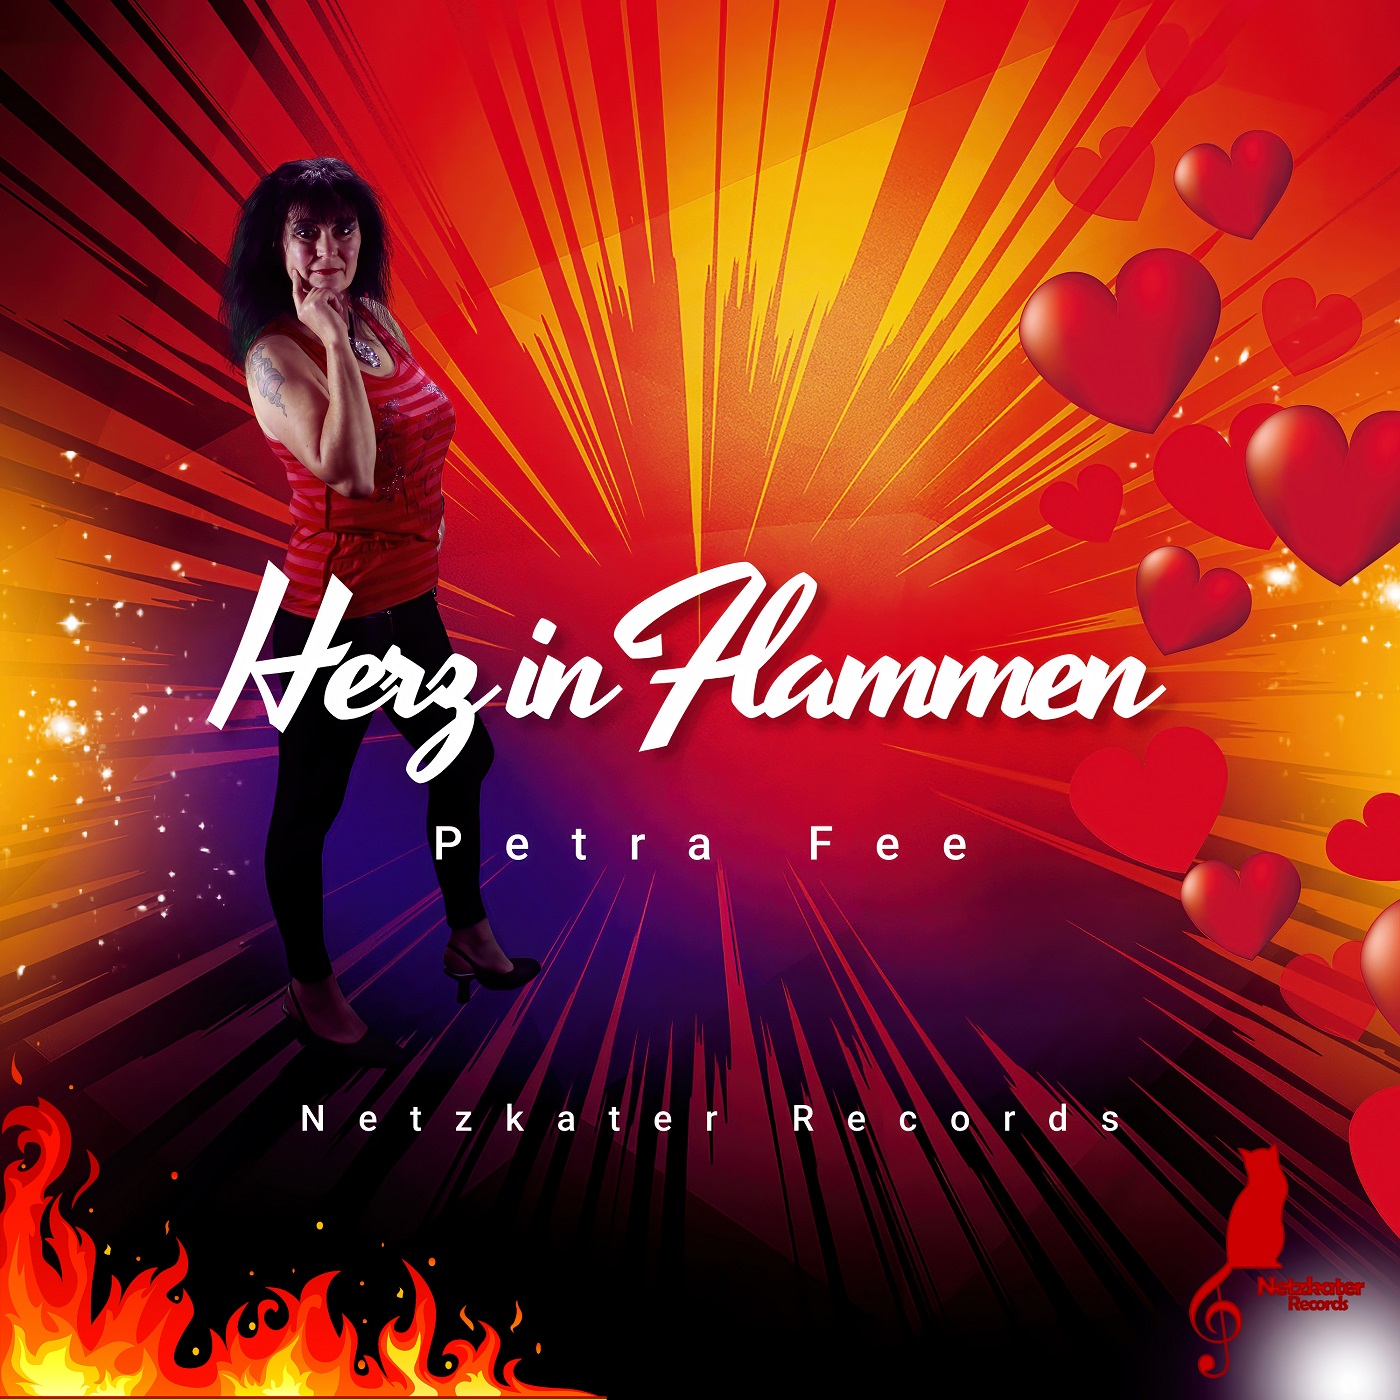 Petra fee - Herz in Flammen_Cover.jpg